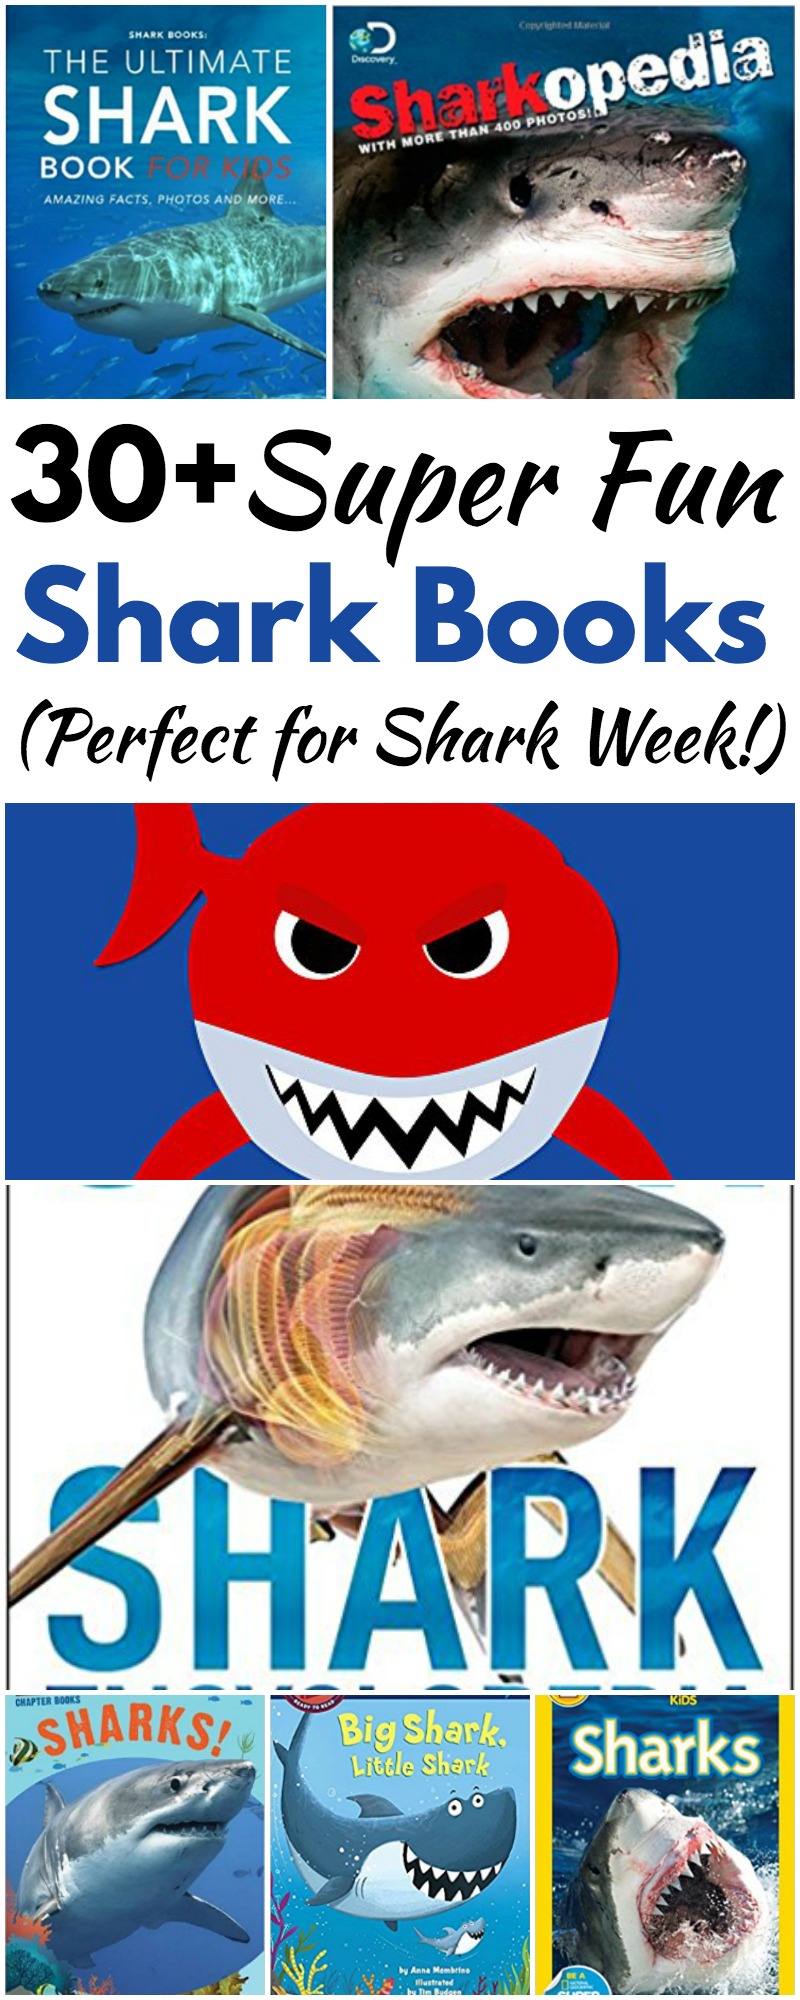 30+ Super Fun Shark Books Perfect for Shark Week